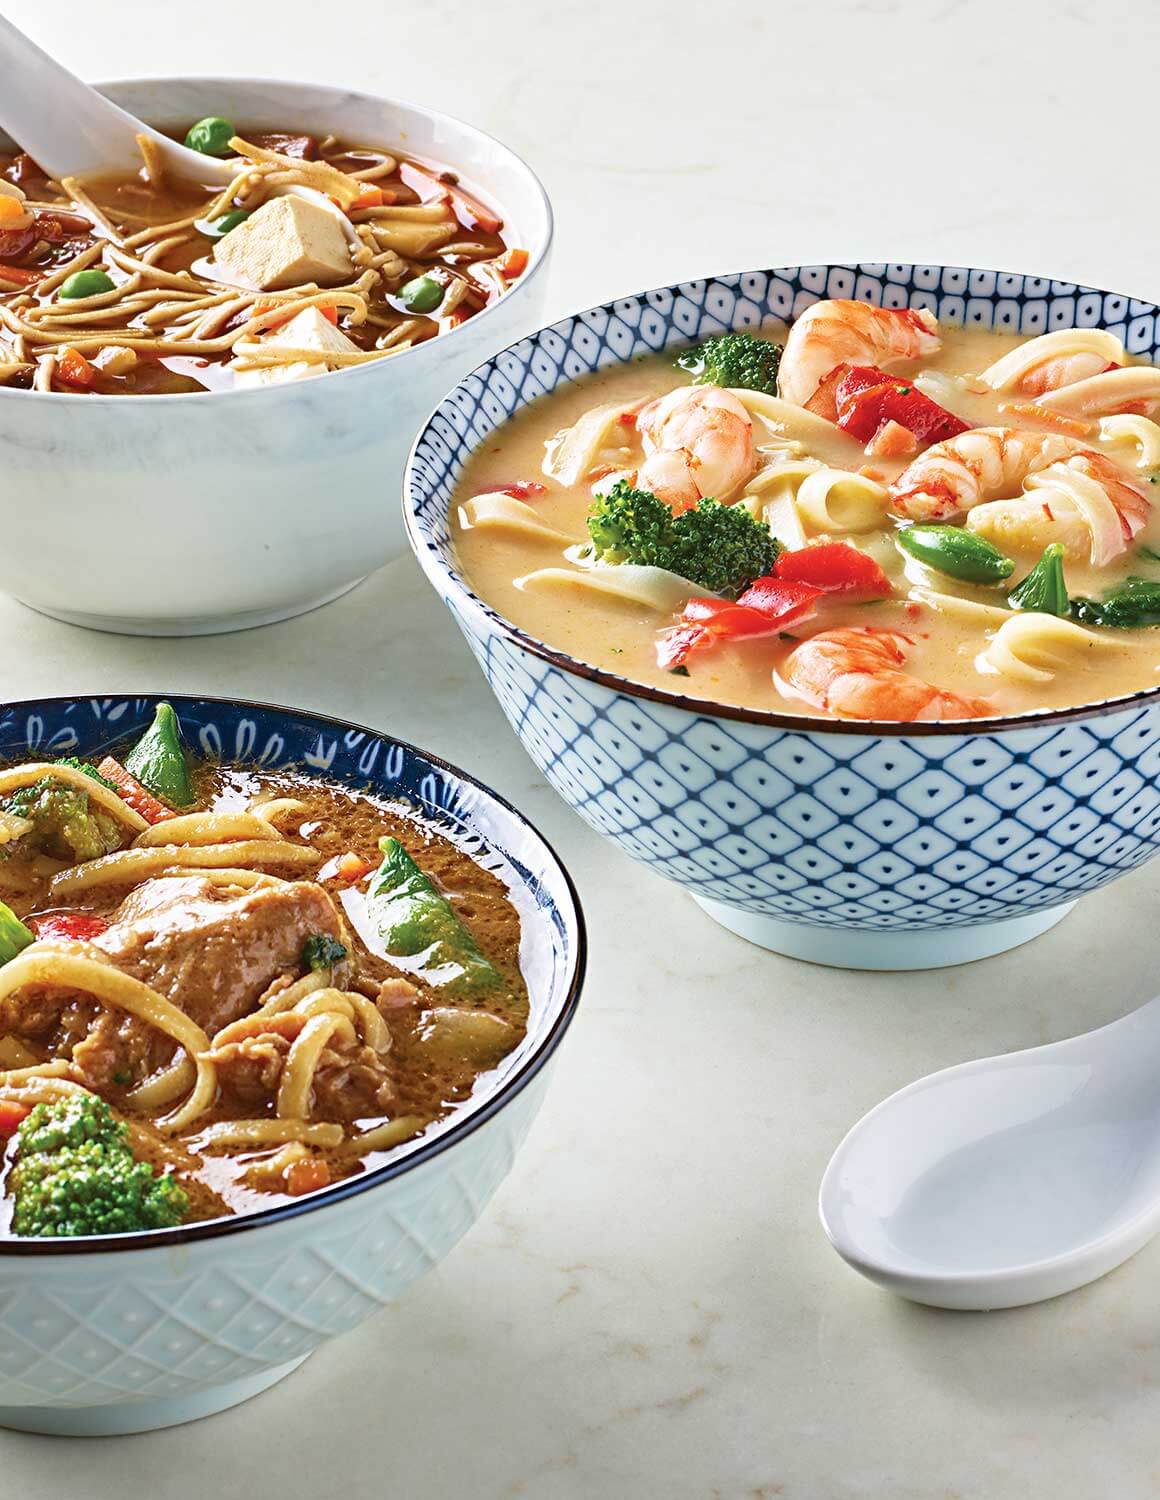 Asian soups